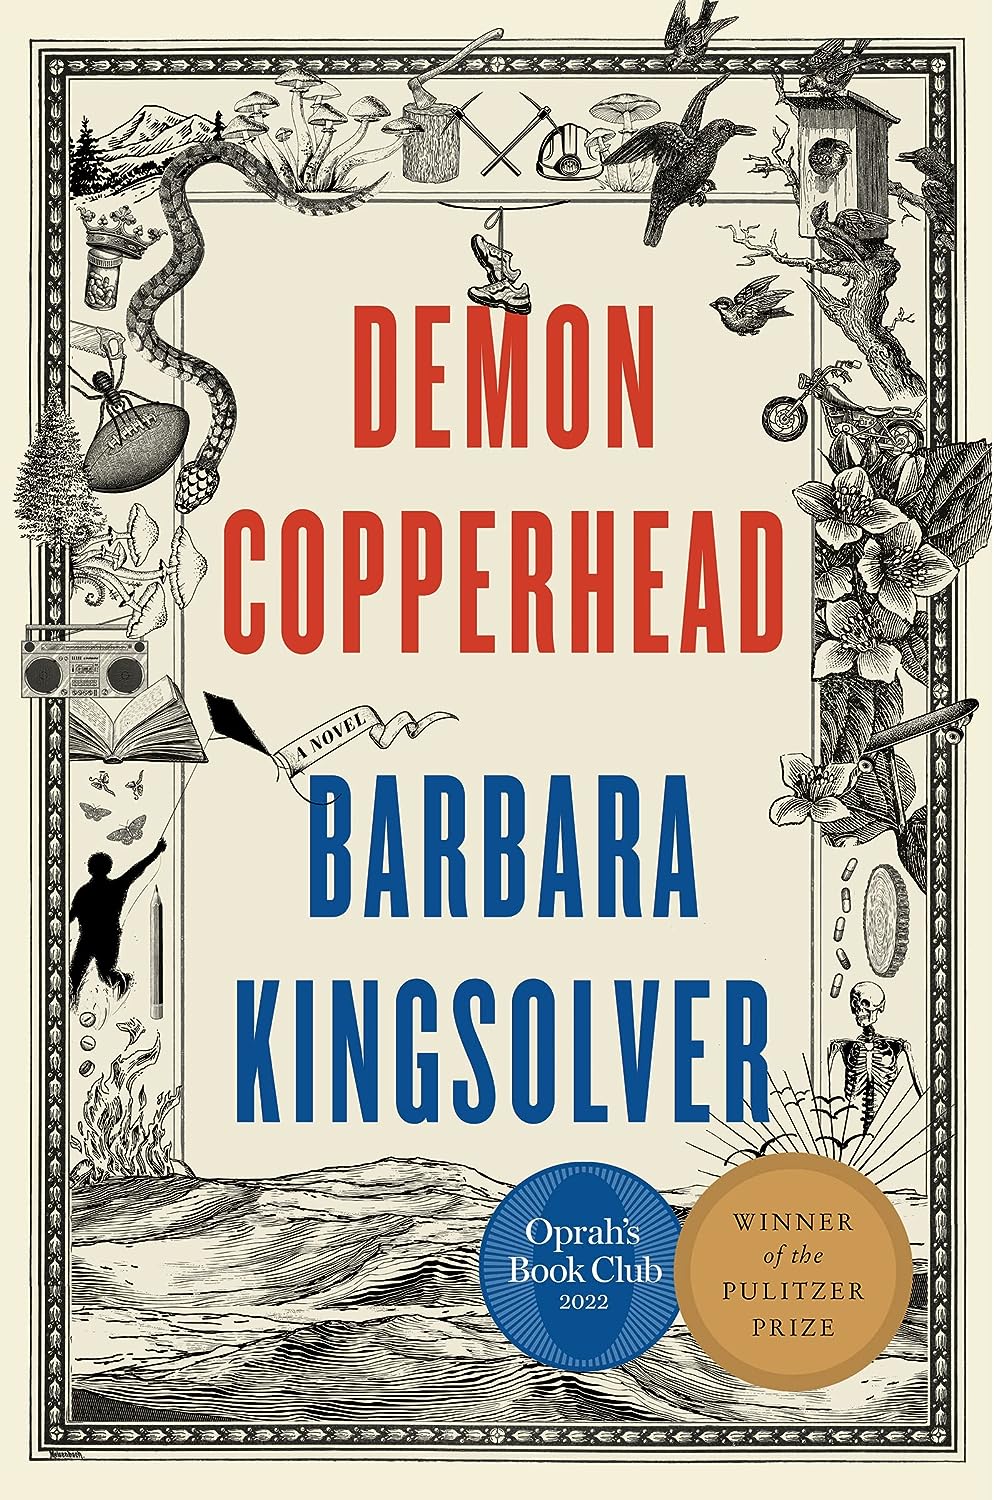 Demon Copperhead - A Novel: A Pulitzer Prize Winner